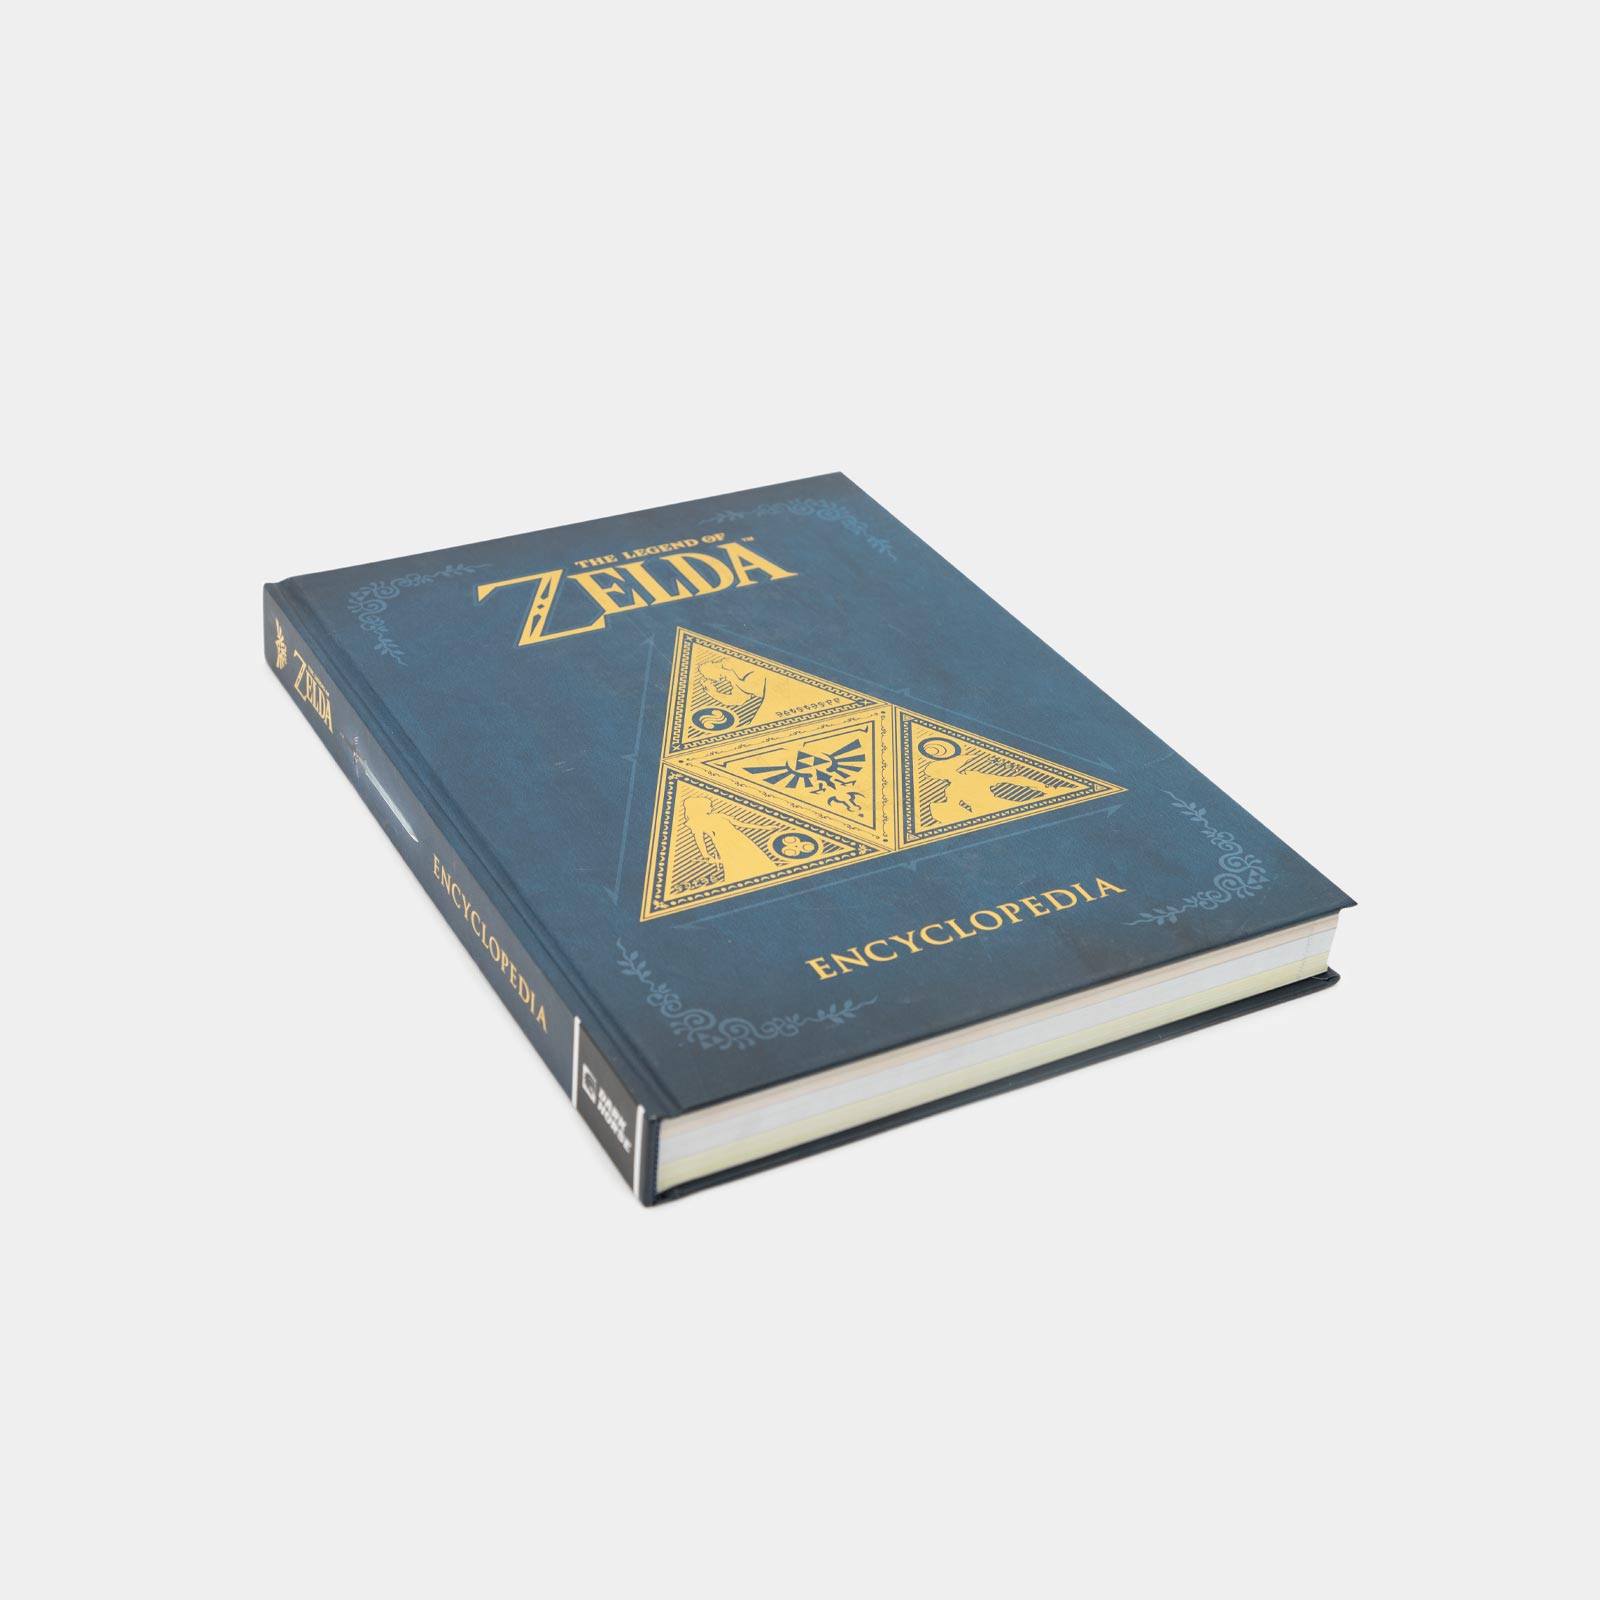 Libro: Zelda Encyclopedia - Reseña en Español 